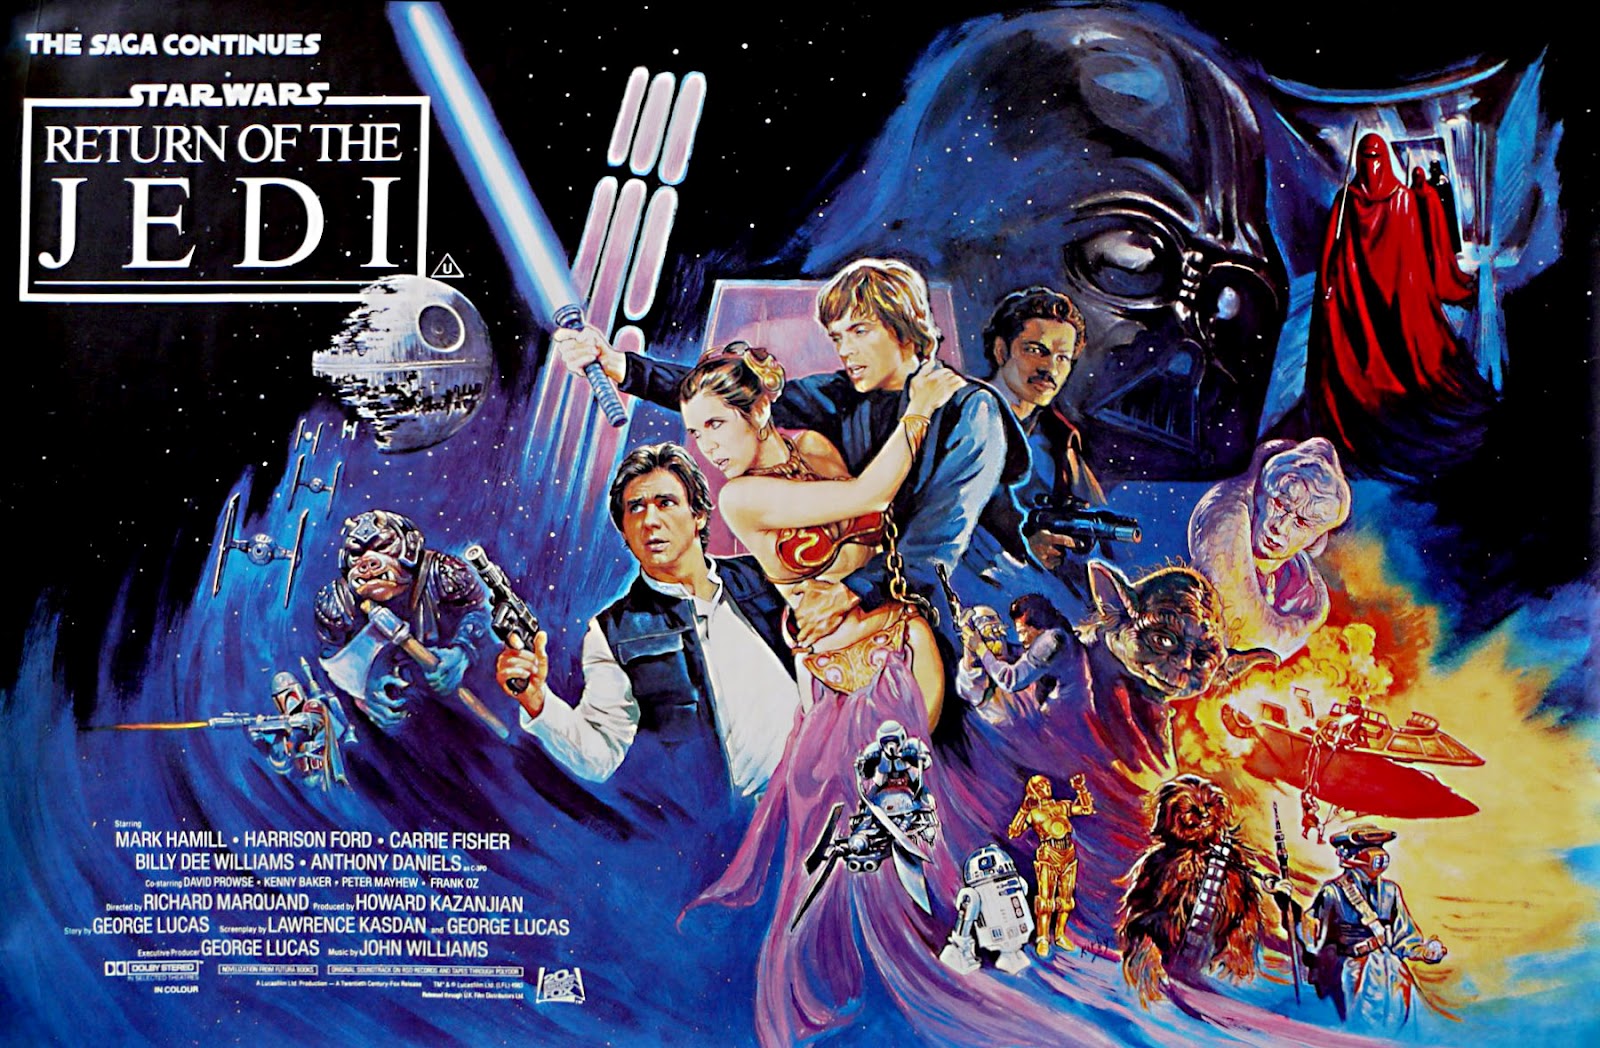 Star Wars Episode VI The Return of the Jedi 1983 Richard